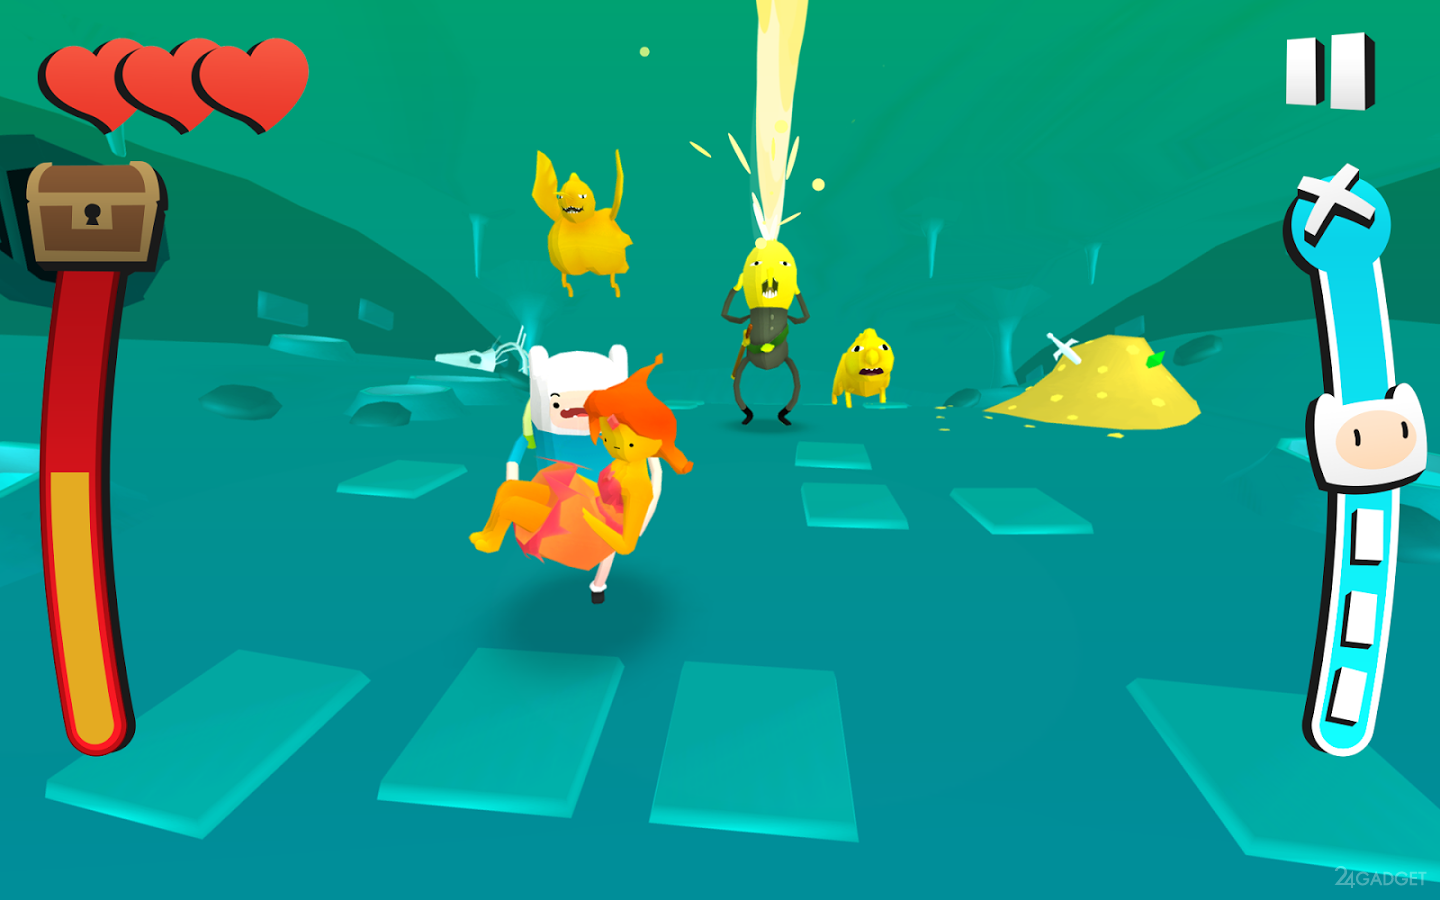 Адвентуре тайм игра. Adventure time Android игра. Время приключений: время наизнанку. Веселые приключения игра.